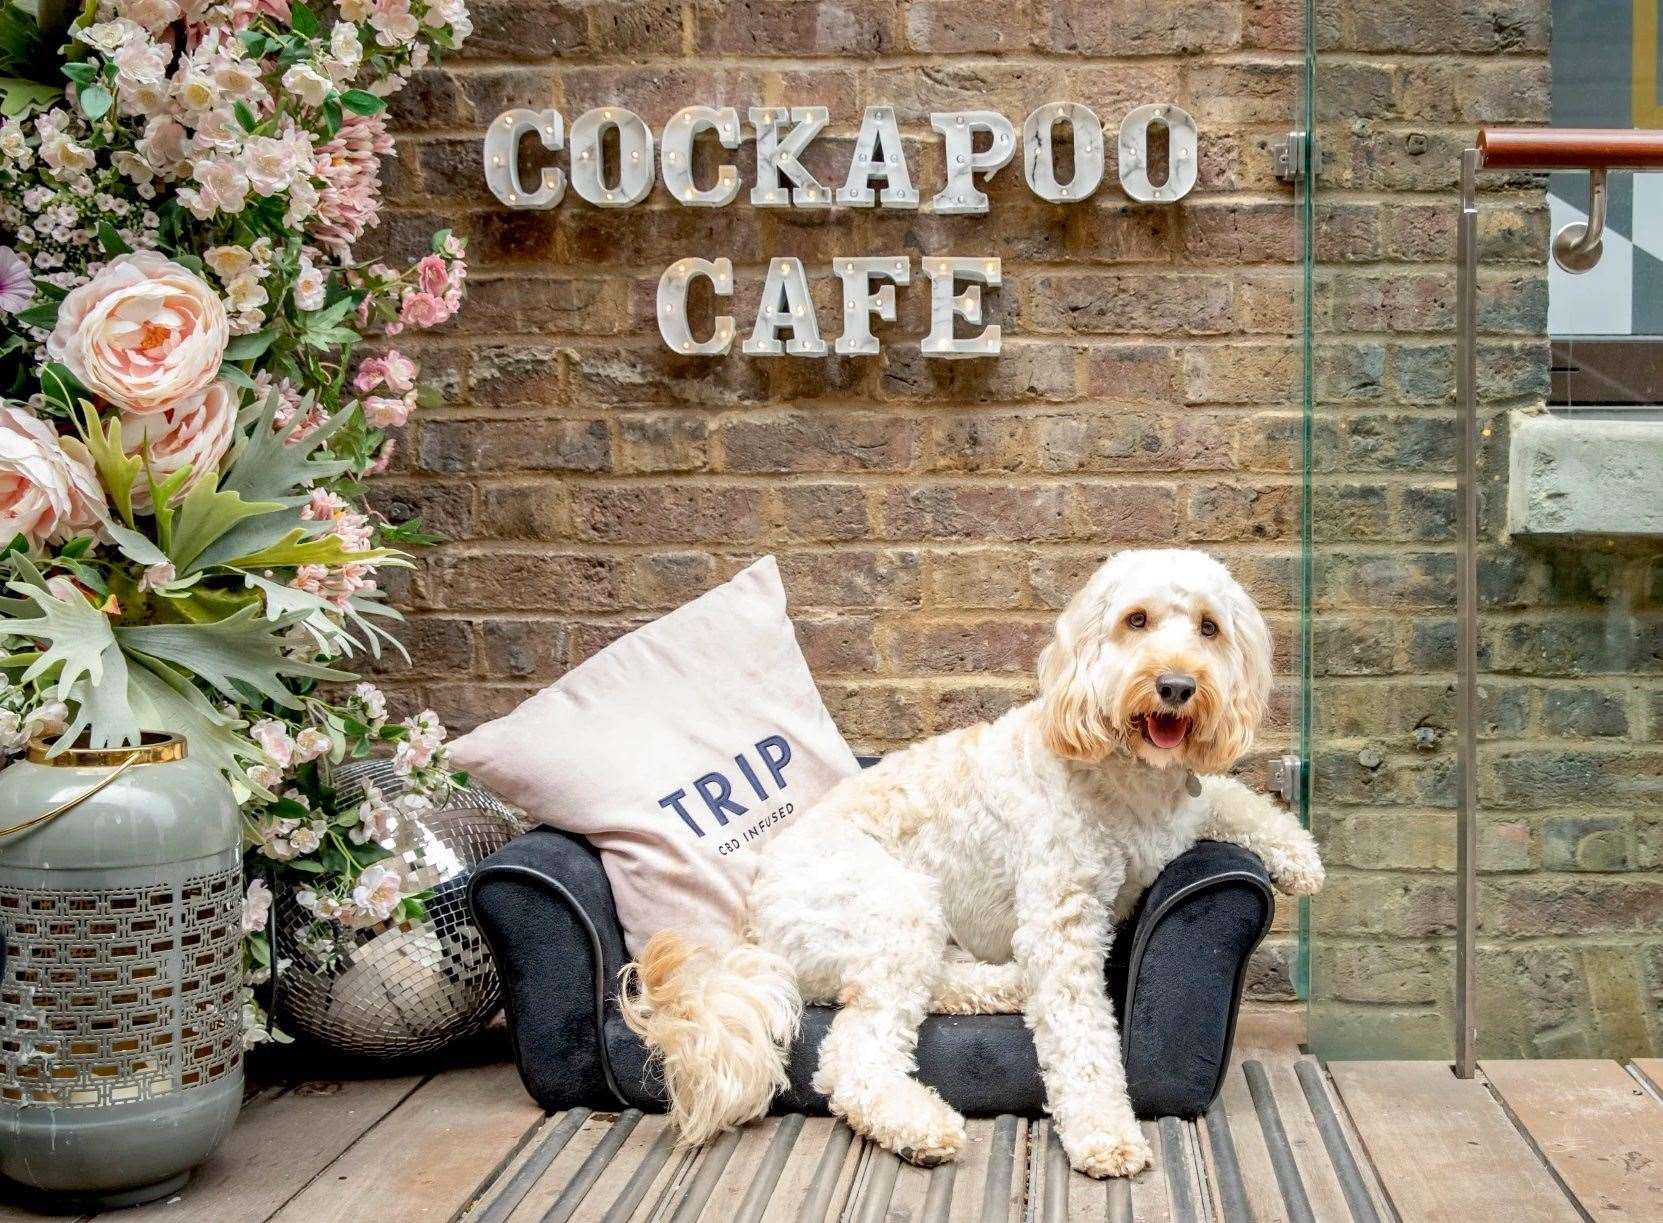 Cockapoo cafe is coming to Tunbridge Wells